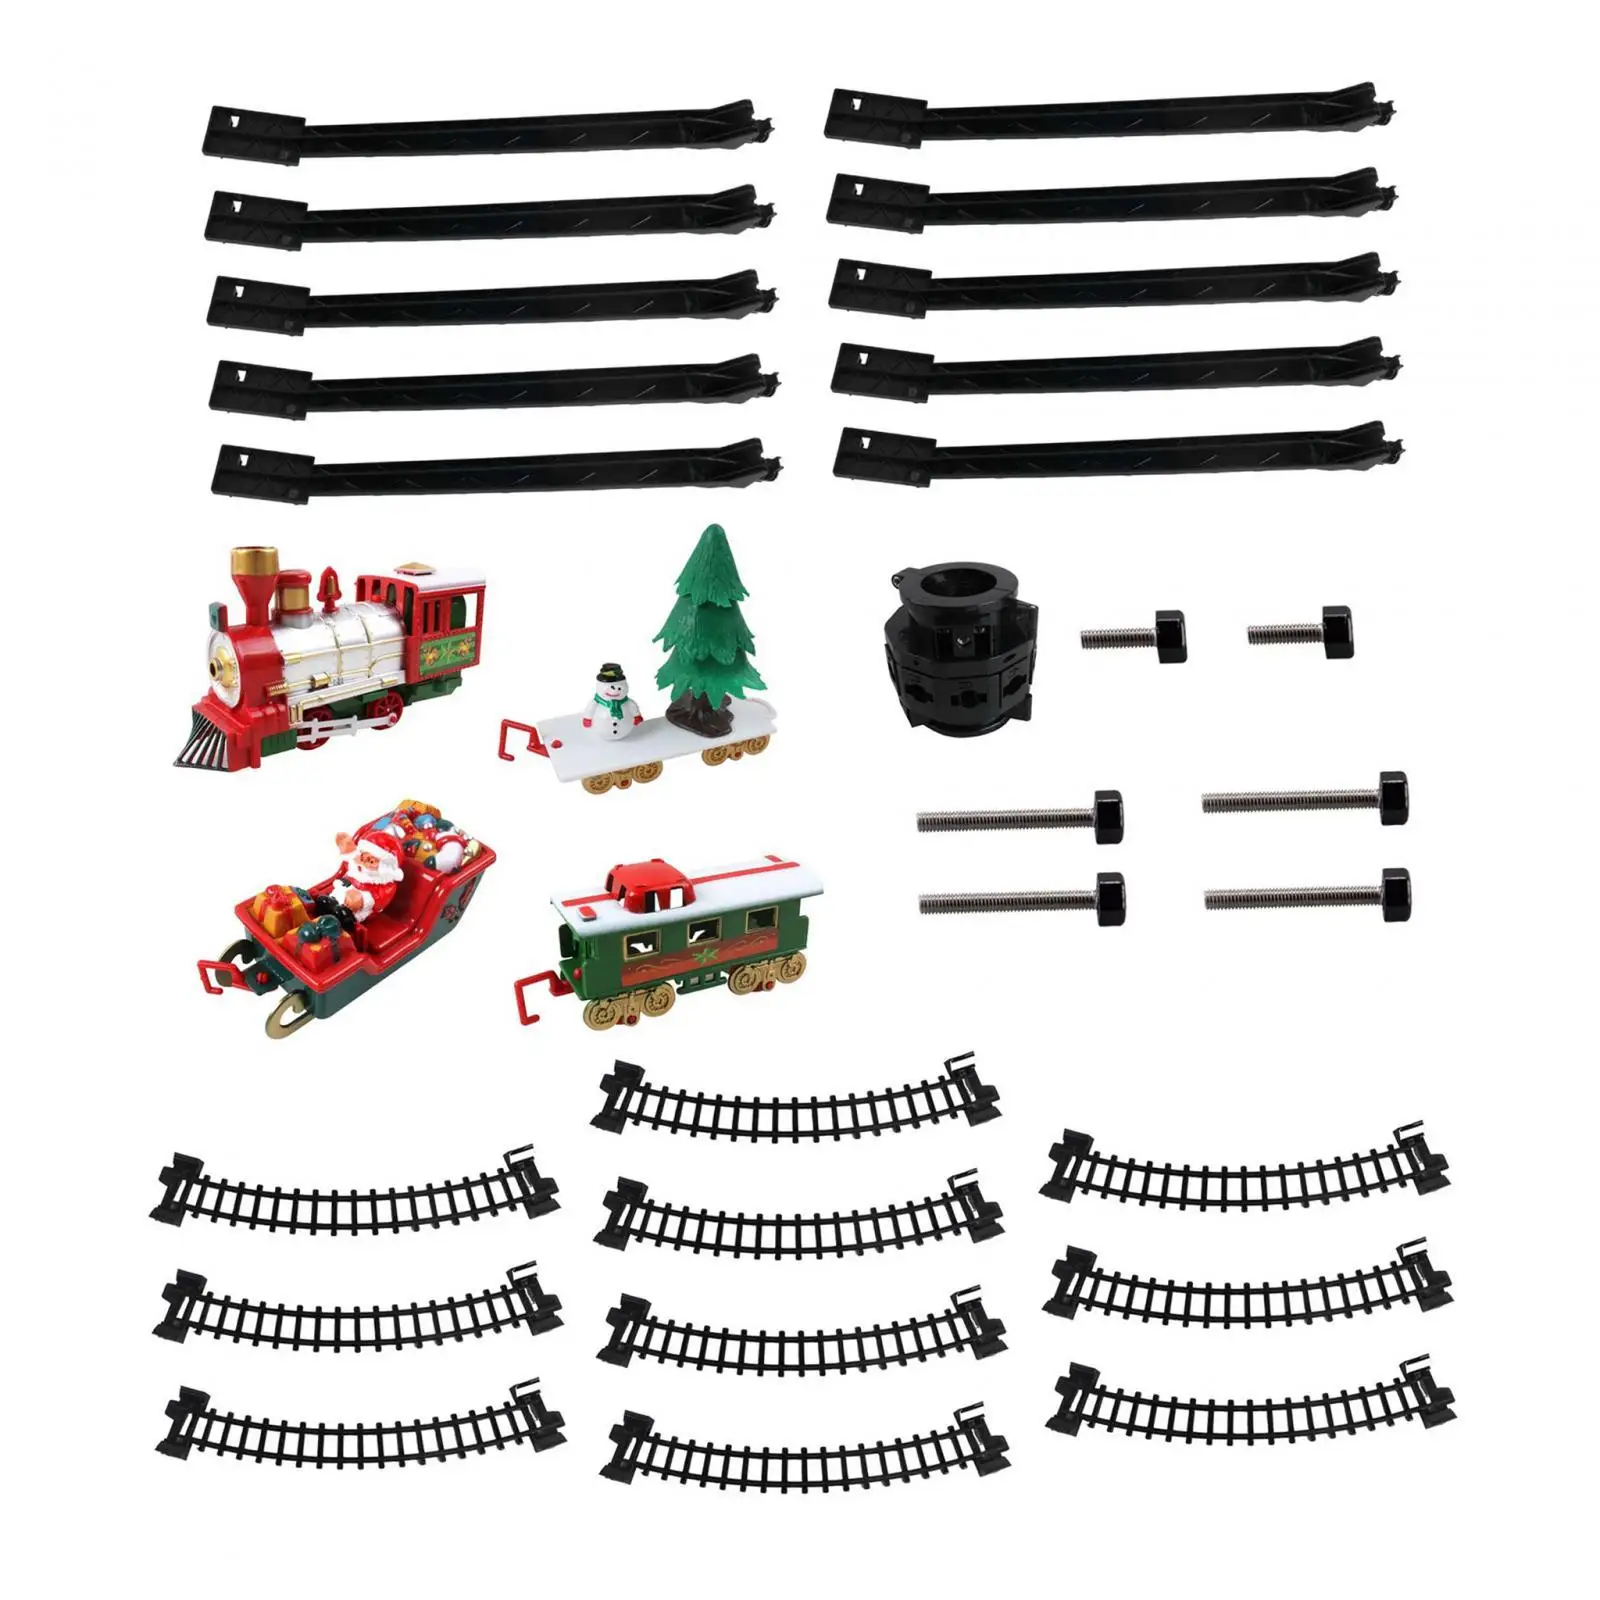 Kids Funny Train Set Cargo Cars and 10 Tracks Battery Powered DIY Railway Tracks Set Christmas Gift Train Toy for Boy Children